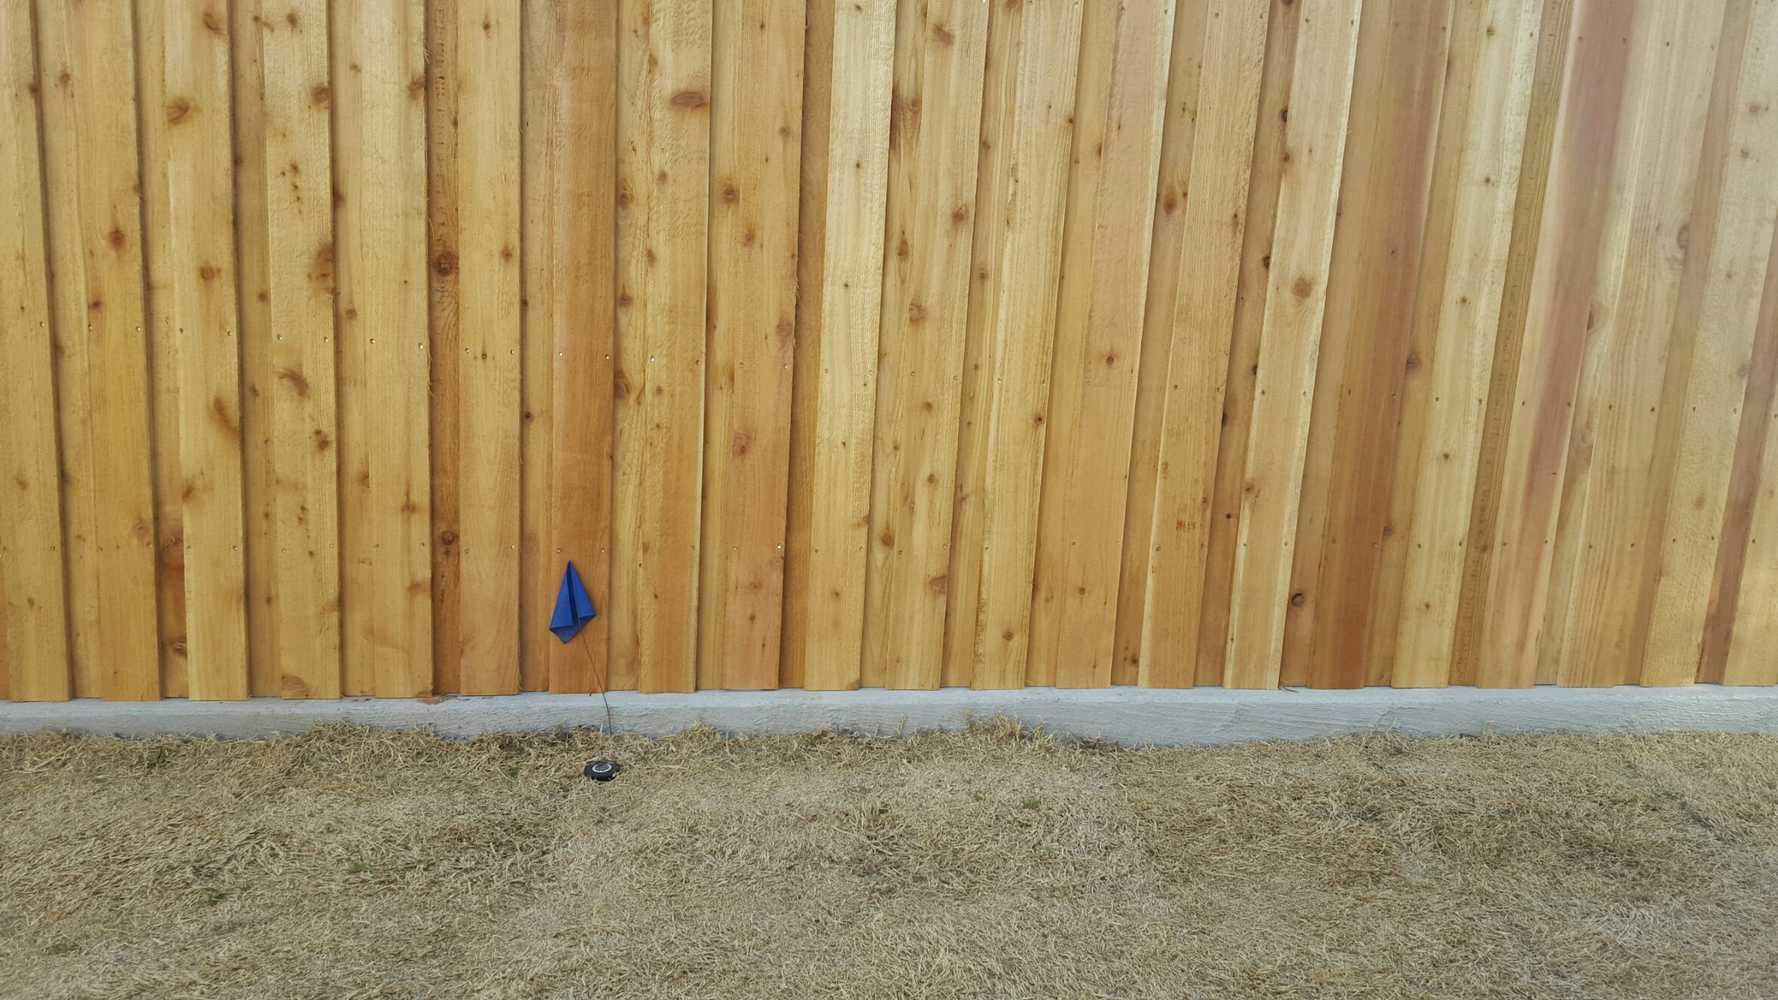 Wood Fence Installation